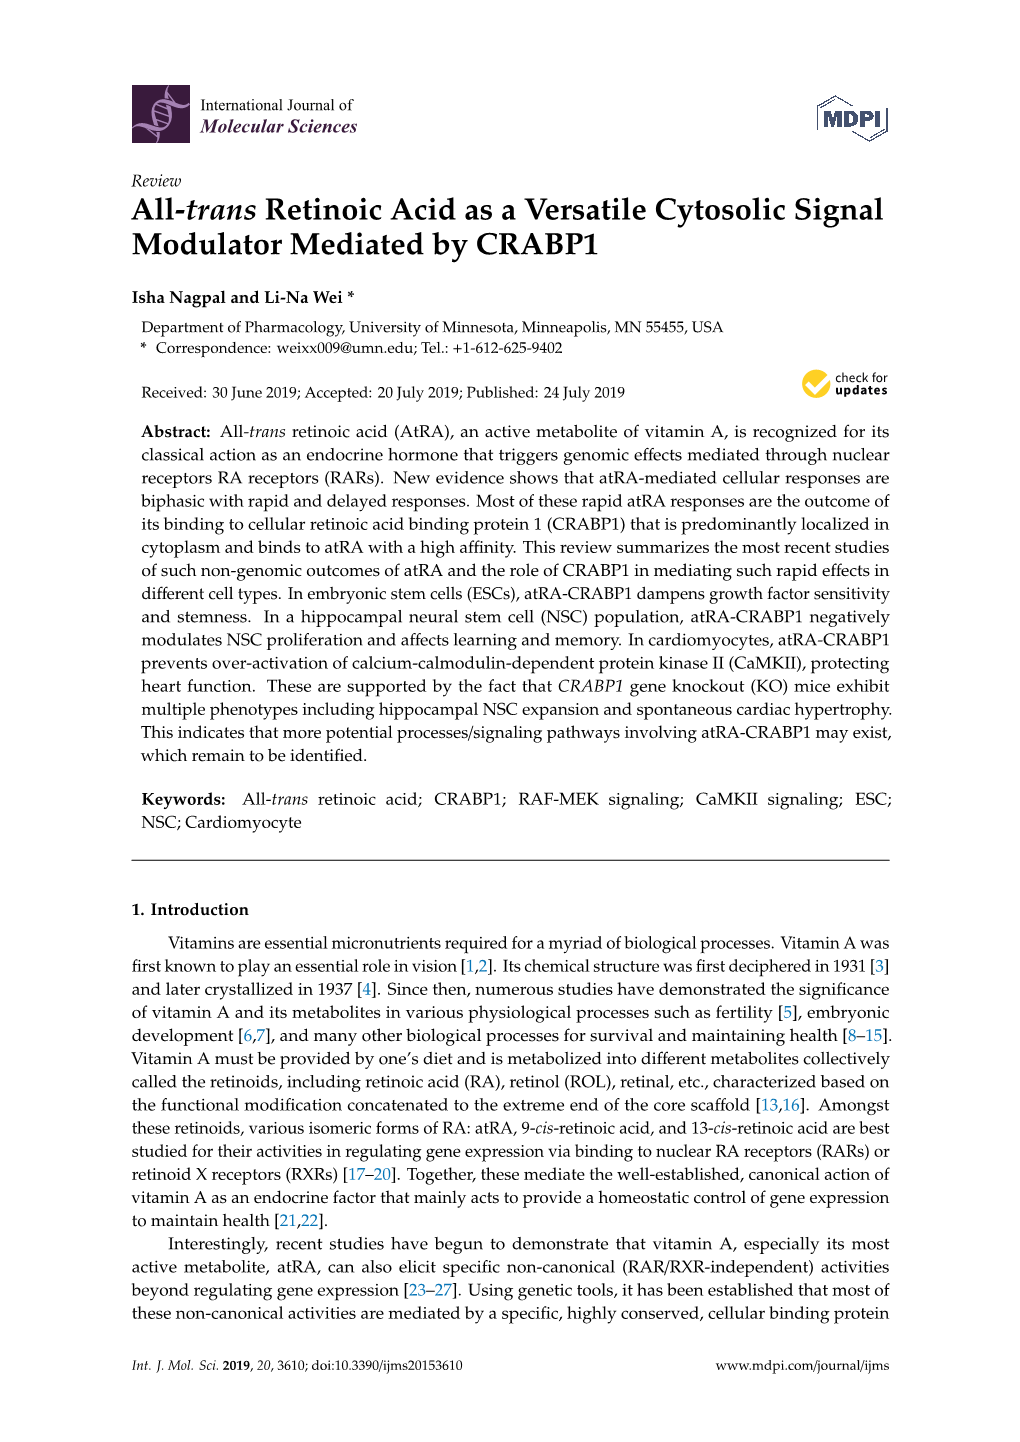 All-Trans Retinoic Acid As a Versatile Cytosolic Signal Modulator Mediated by CRABP1